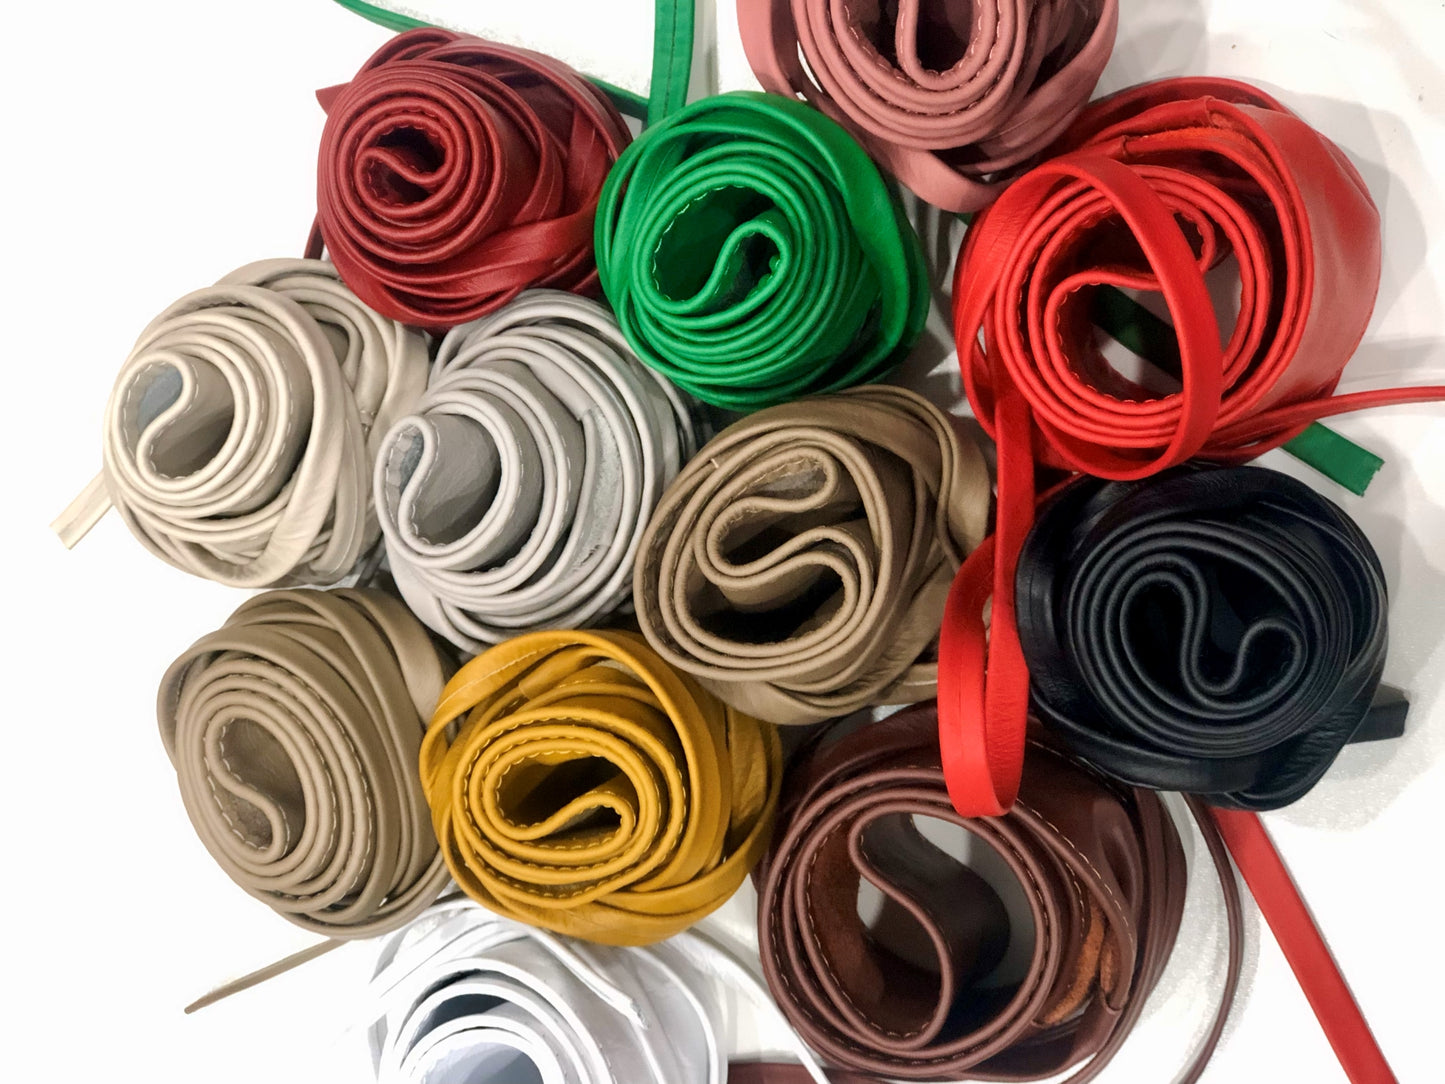 Dark Red Obi belt soft genuine leather wrap belt | Wide waist belt in genuine leather | Genunine leather wrap around boho dress belt